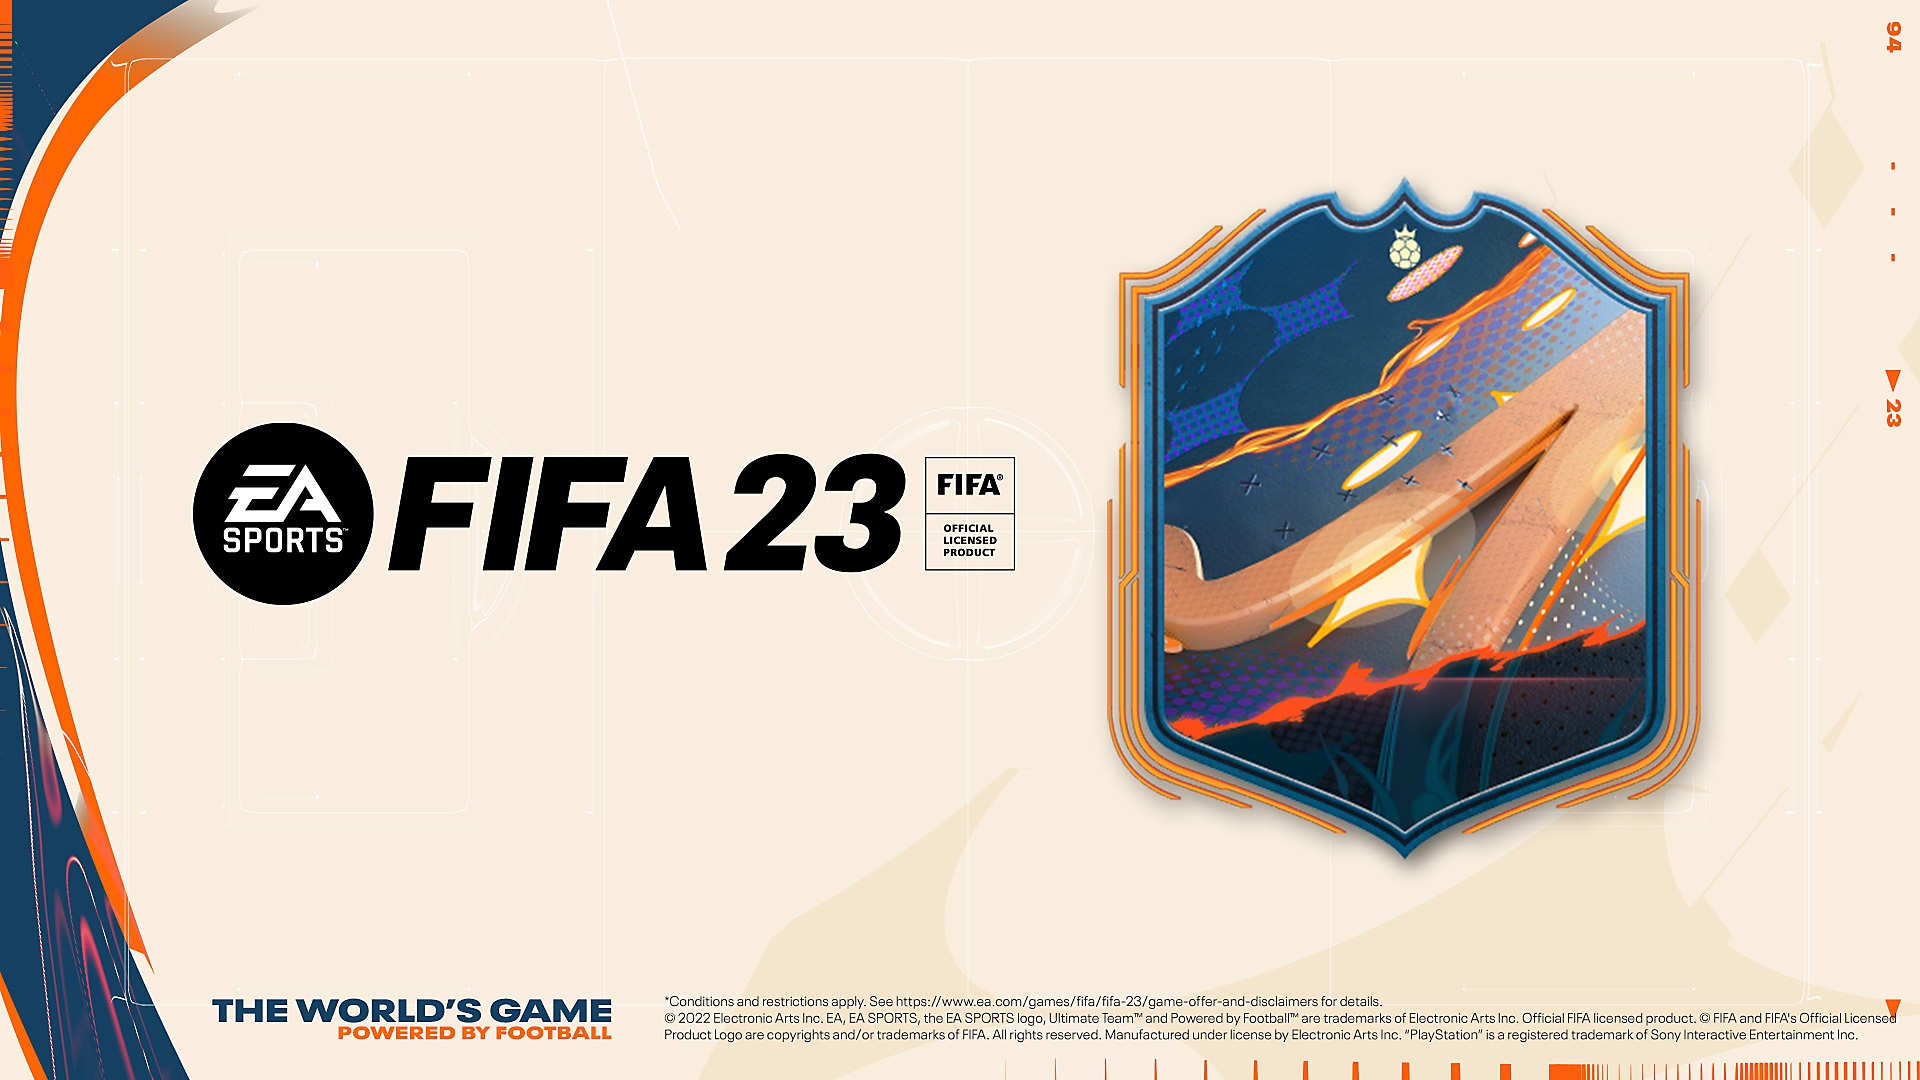 EA Sports FIFA 23 pre-order artwork showing a multi-coloured crest and the FIFA 23 logo